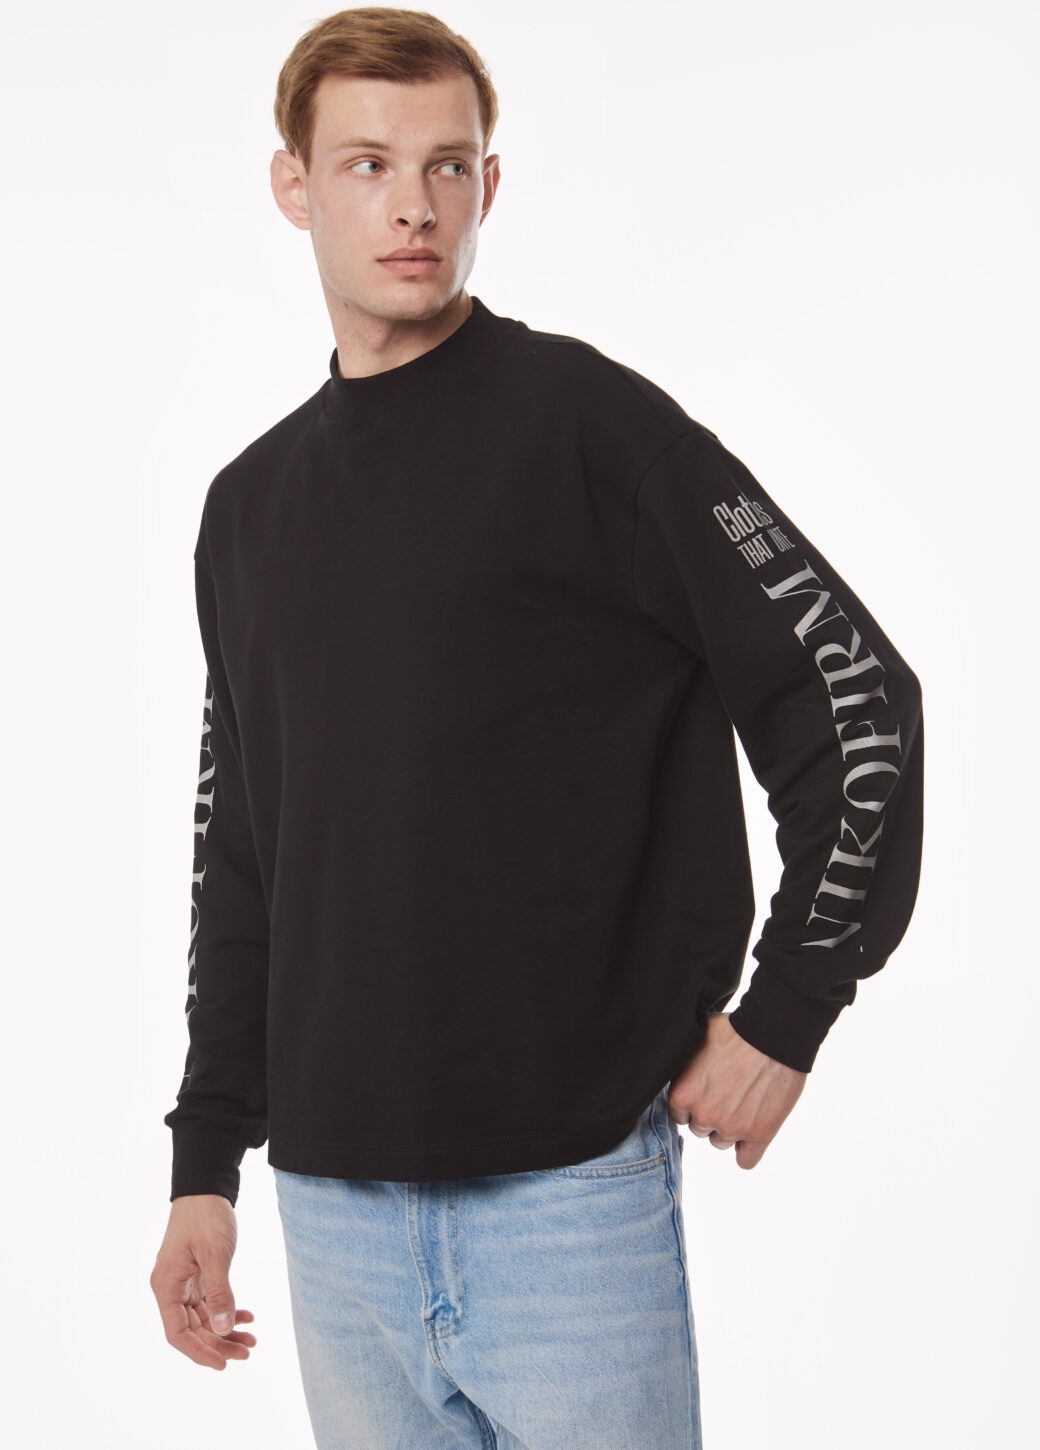 NF Black Sweatshirt with Company Logo